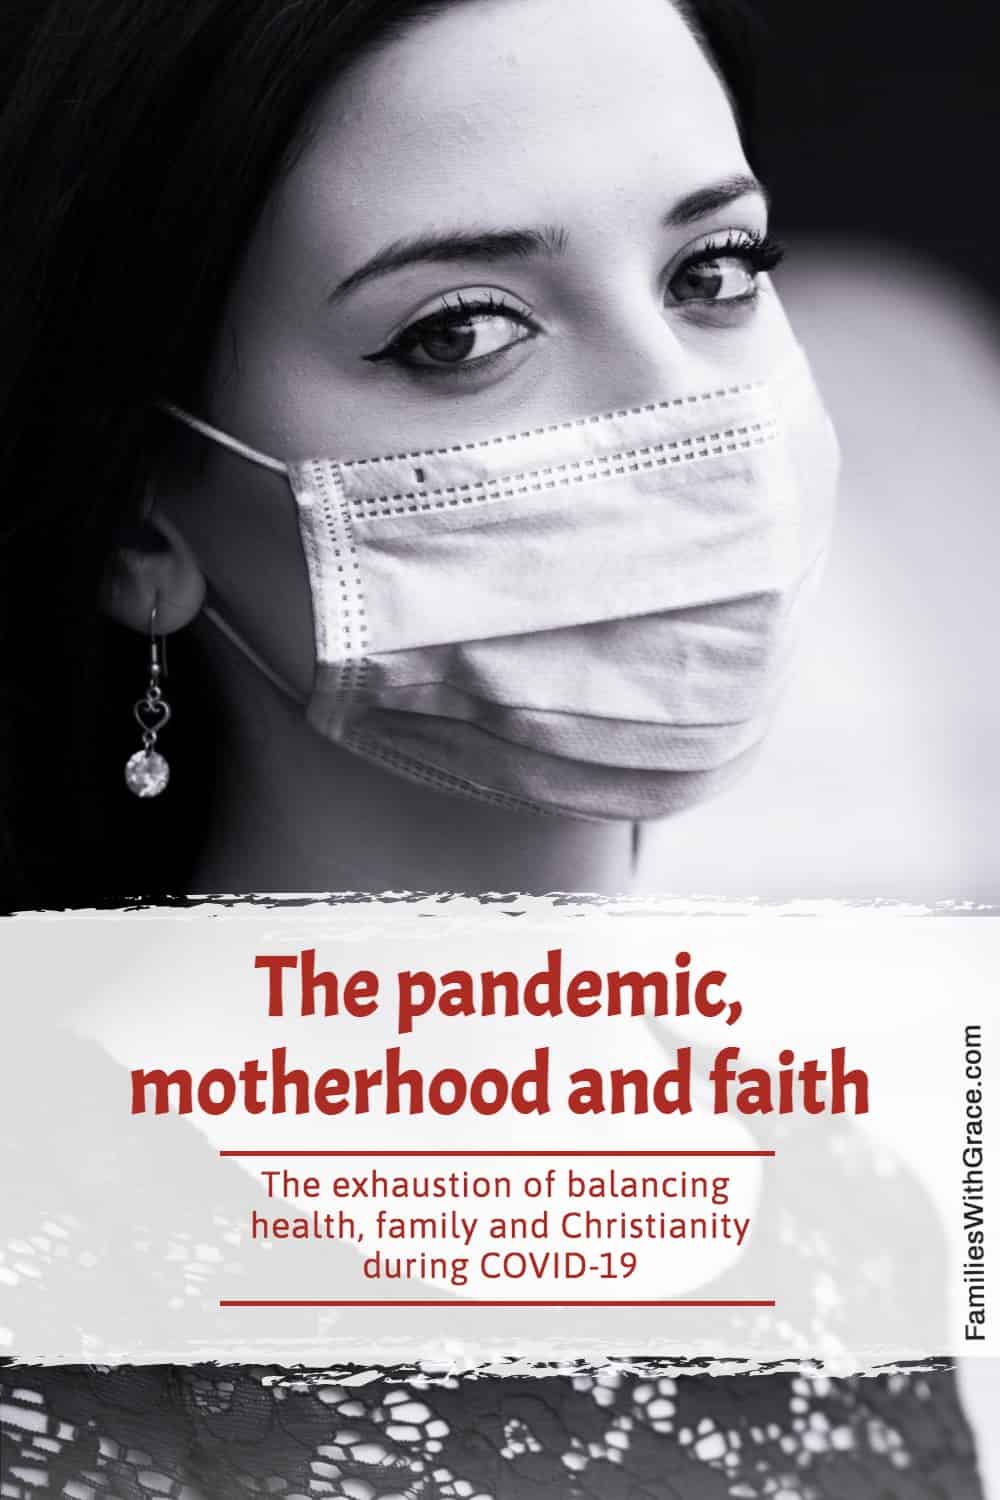 The pandemic, motherhood and faith